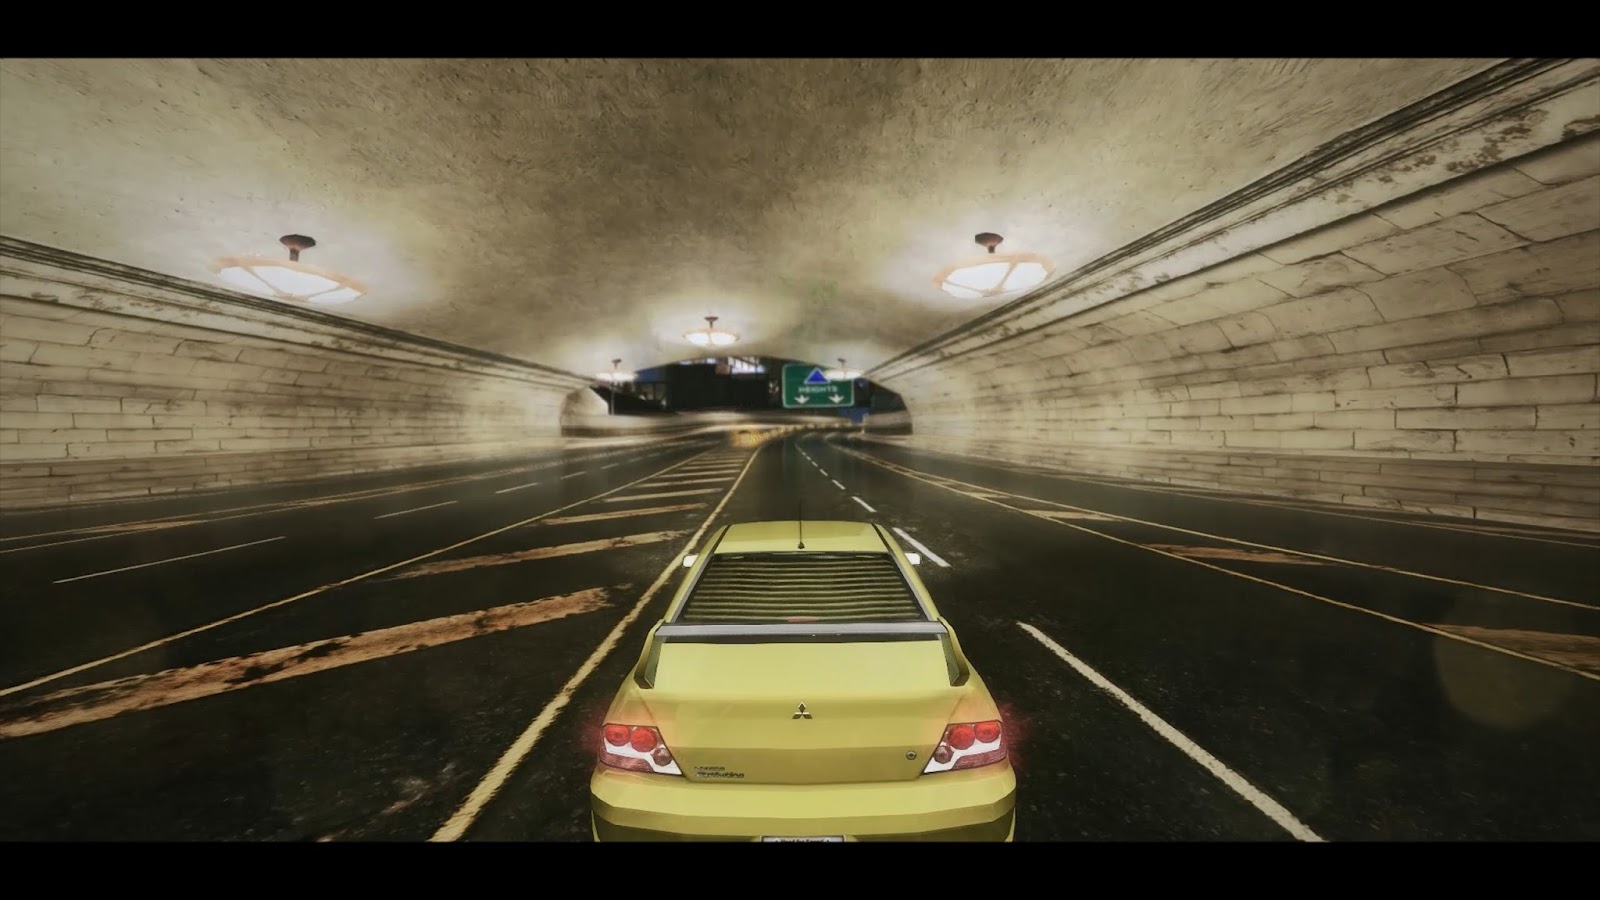 Nfs 2 redux. Андеграунд 2 редукс. Need for Speed Underground 2 Redux. Need for Speed Underground редукс. Need for Speed Underground 2 Remastered.